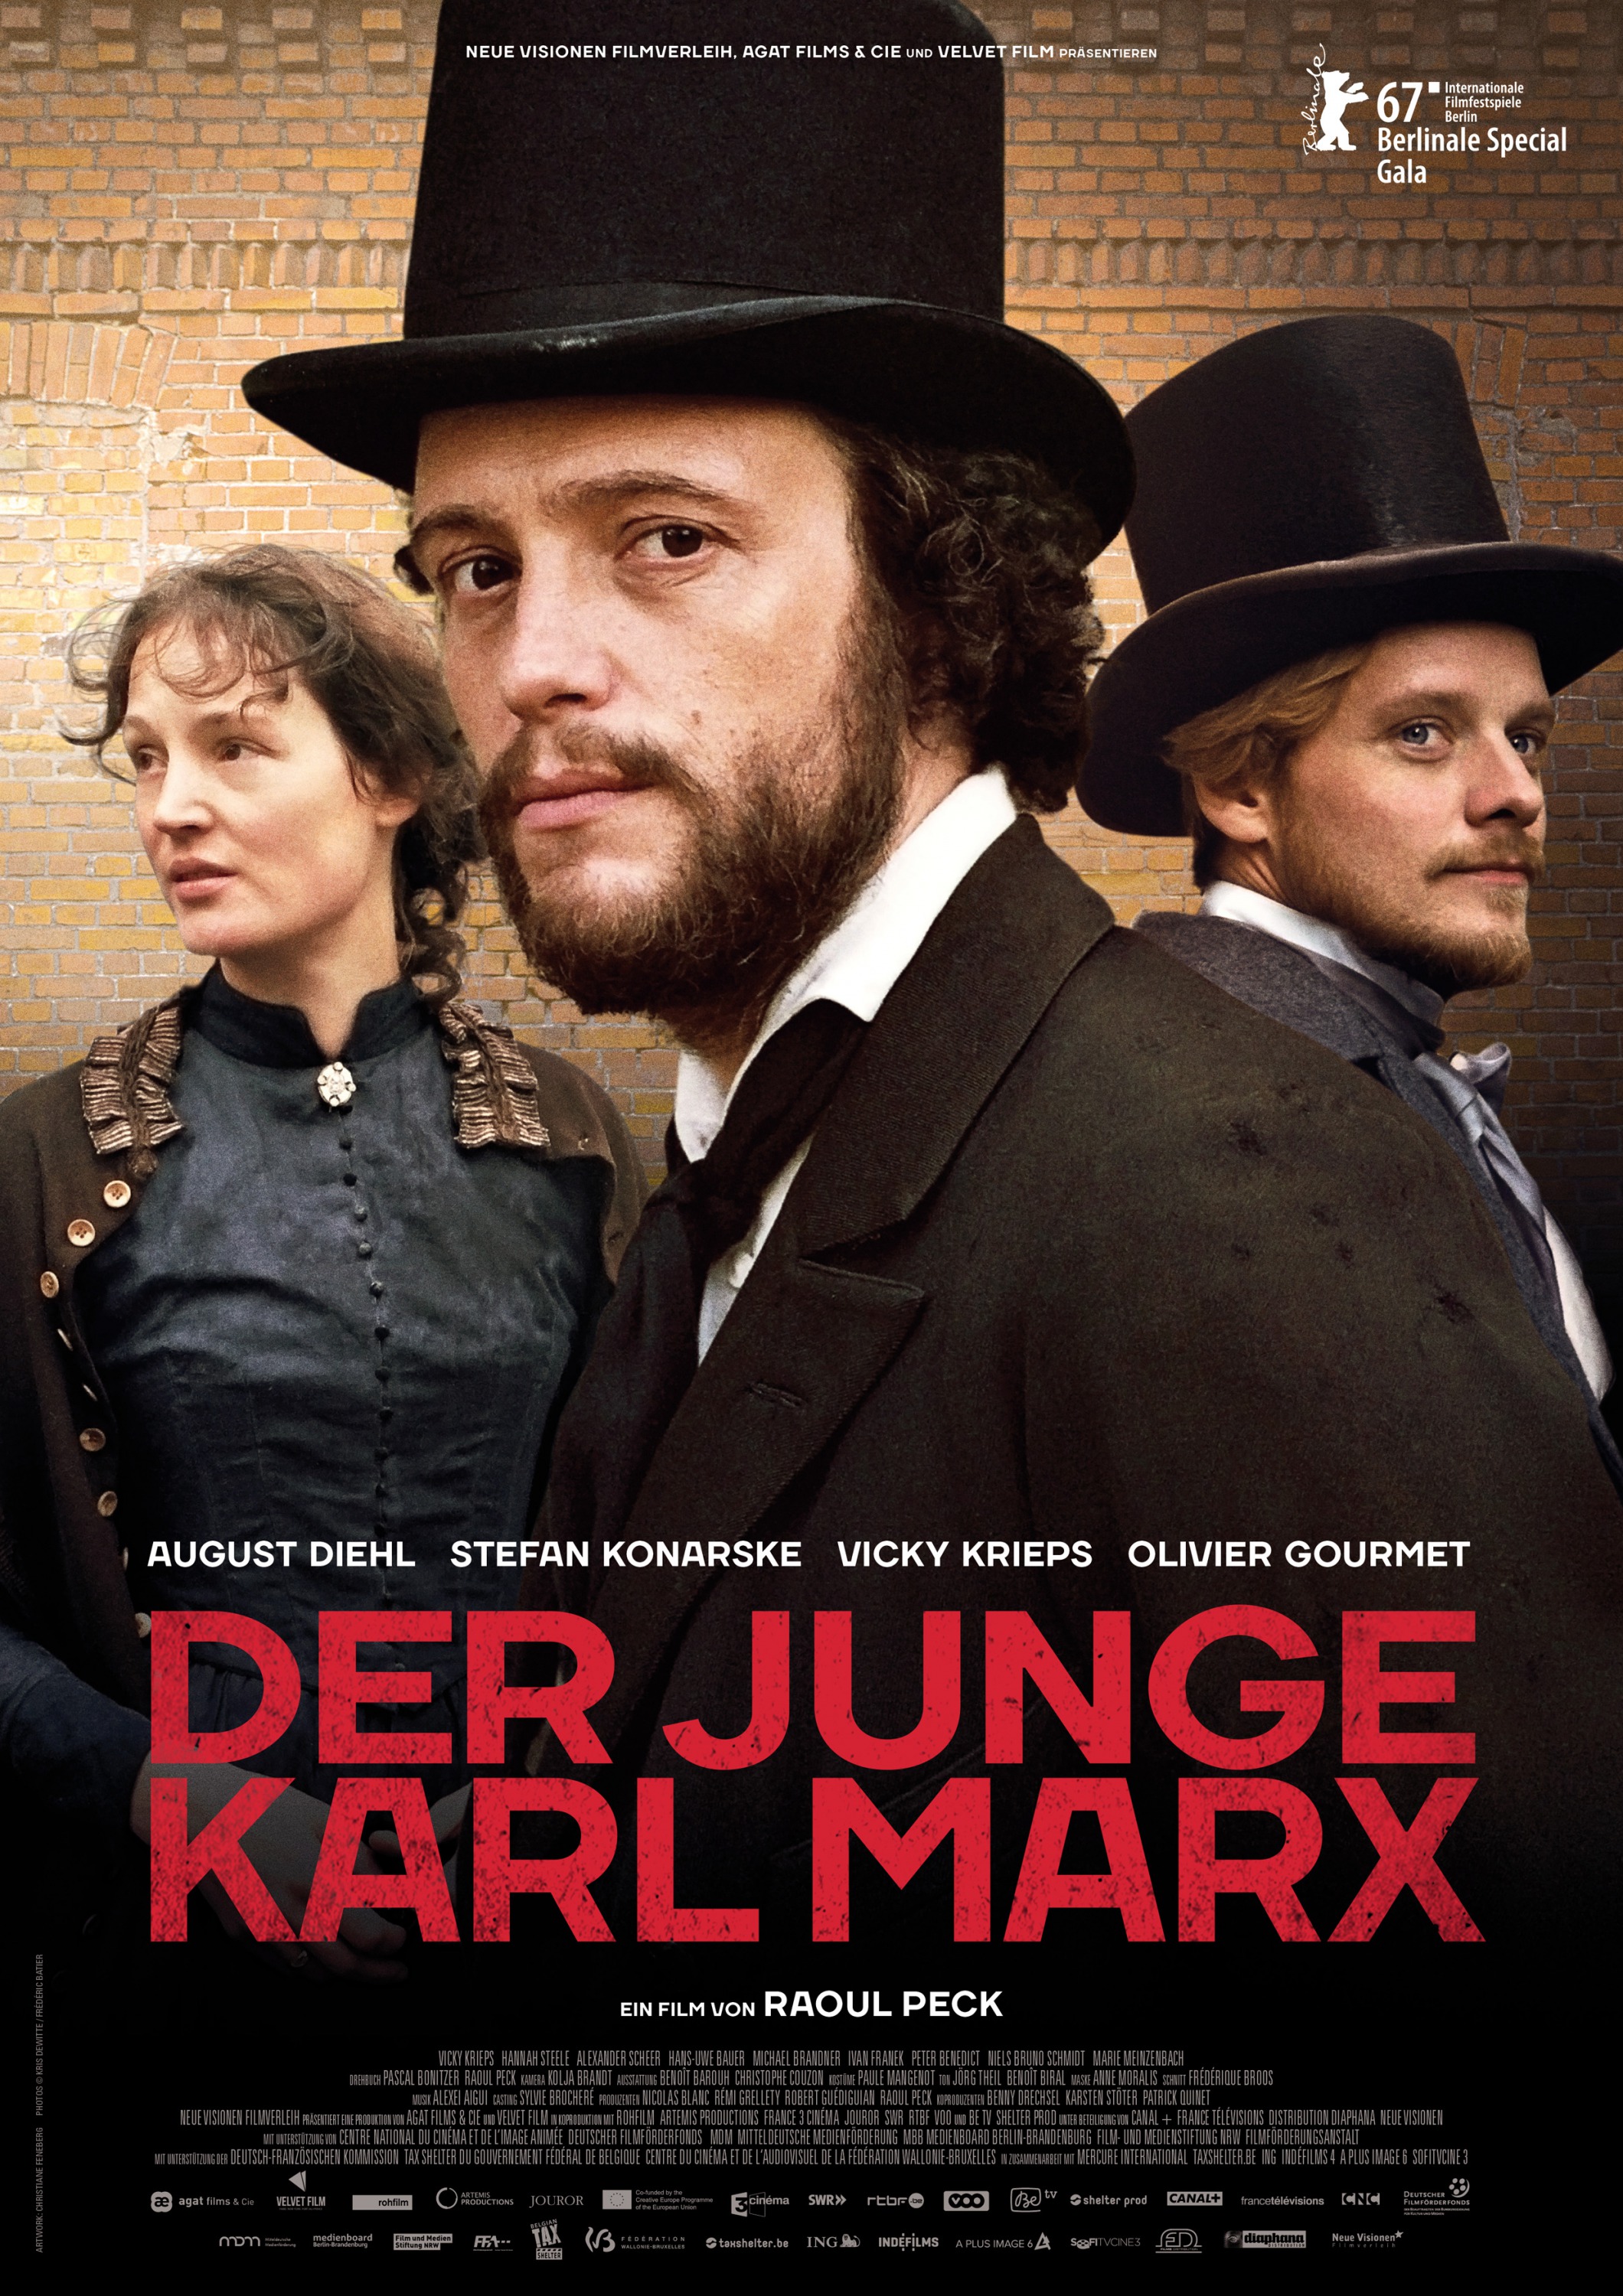 Le Jeune Karl Marx